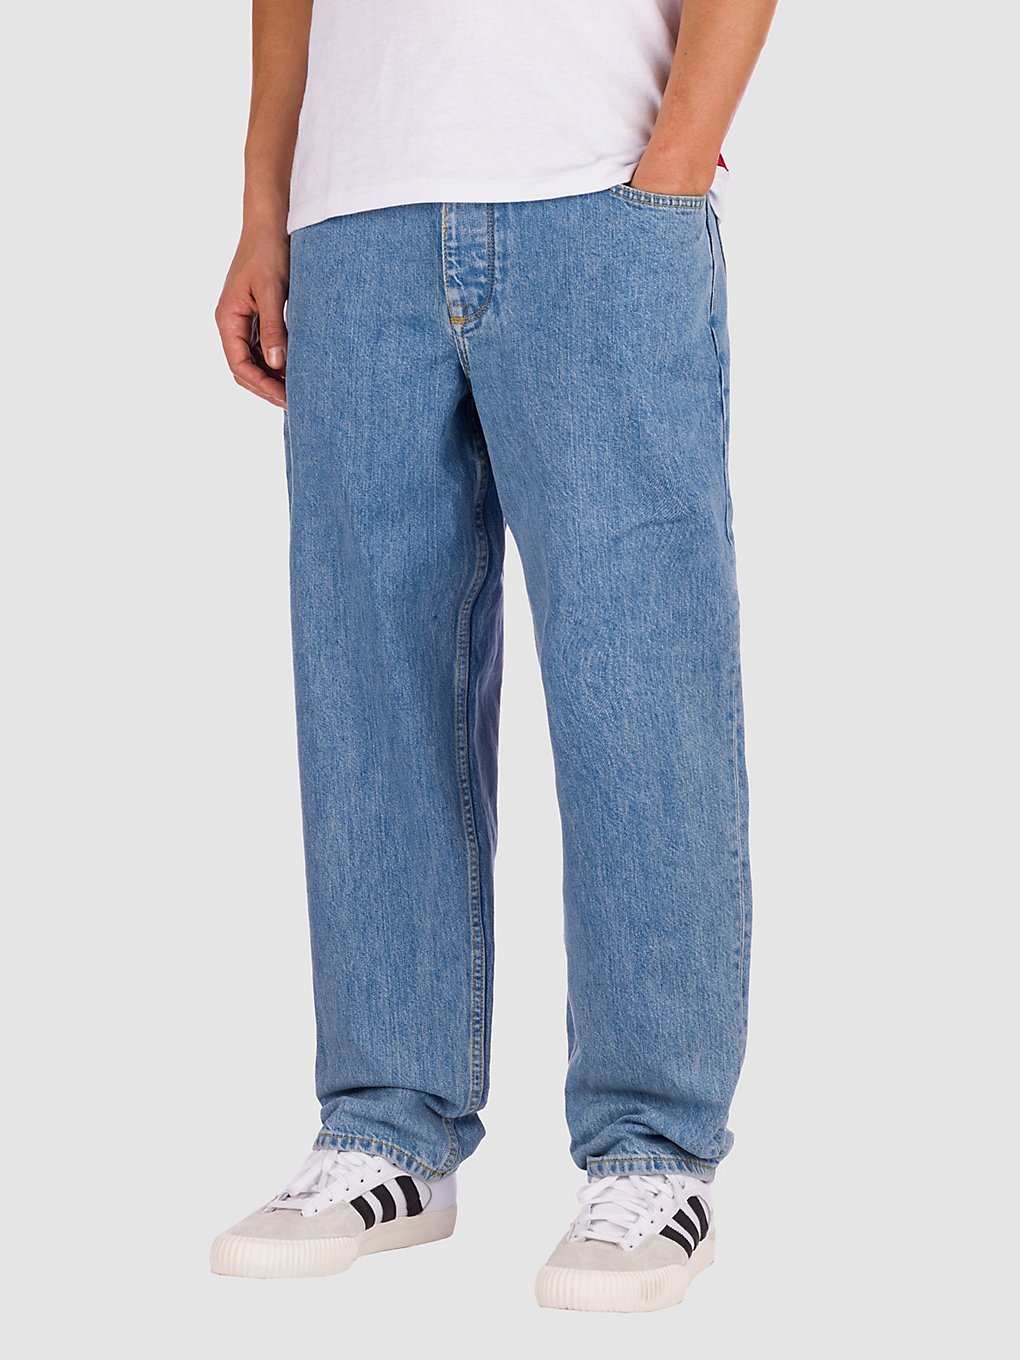 Homeboy X-Tra tasgy Jeans blauw